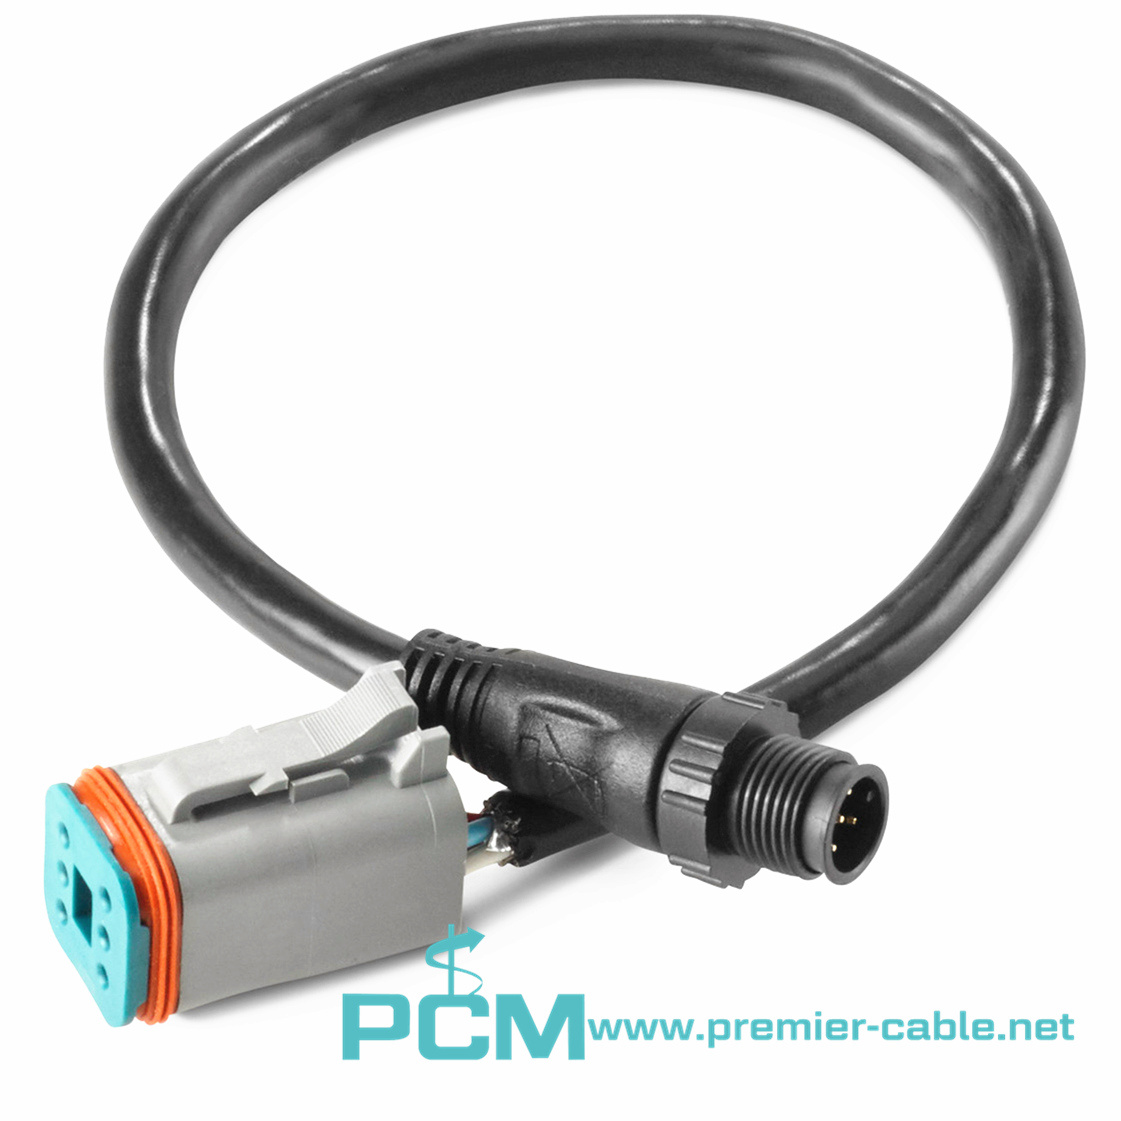 Deutsch DT04 DT06 to M12 NMEA 2000 Cable